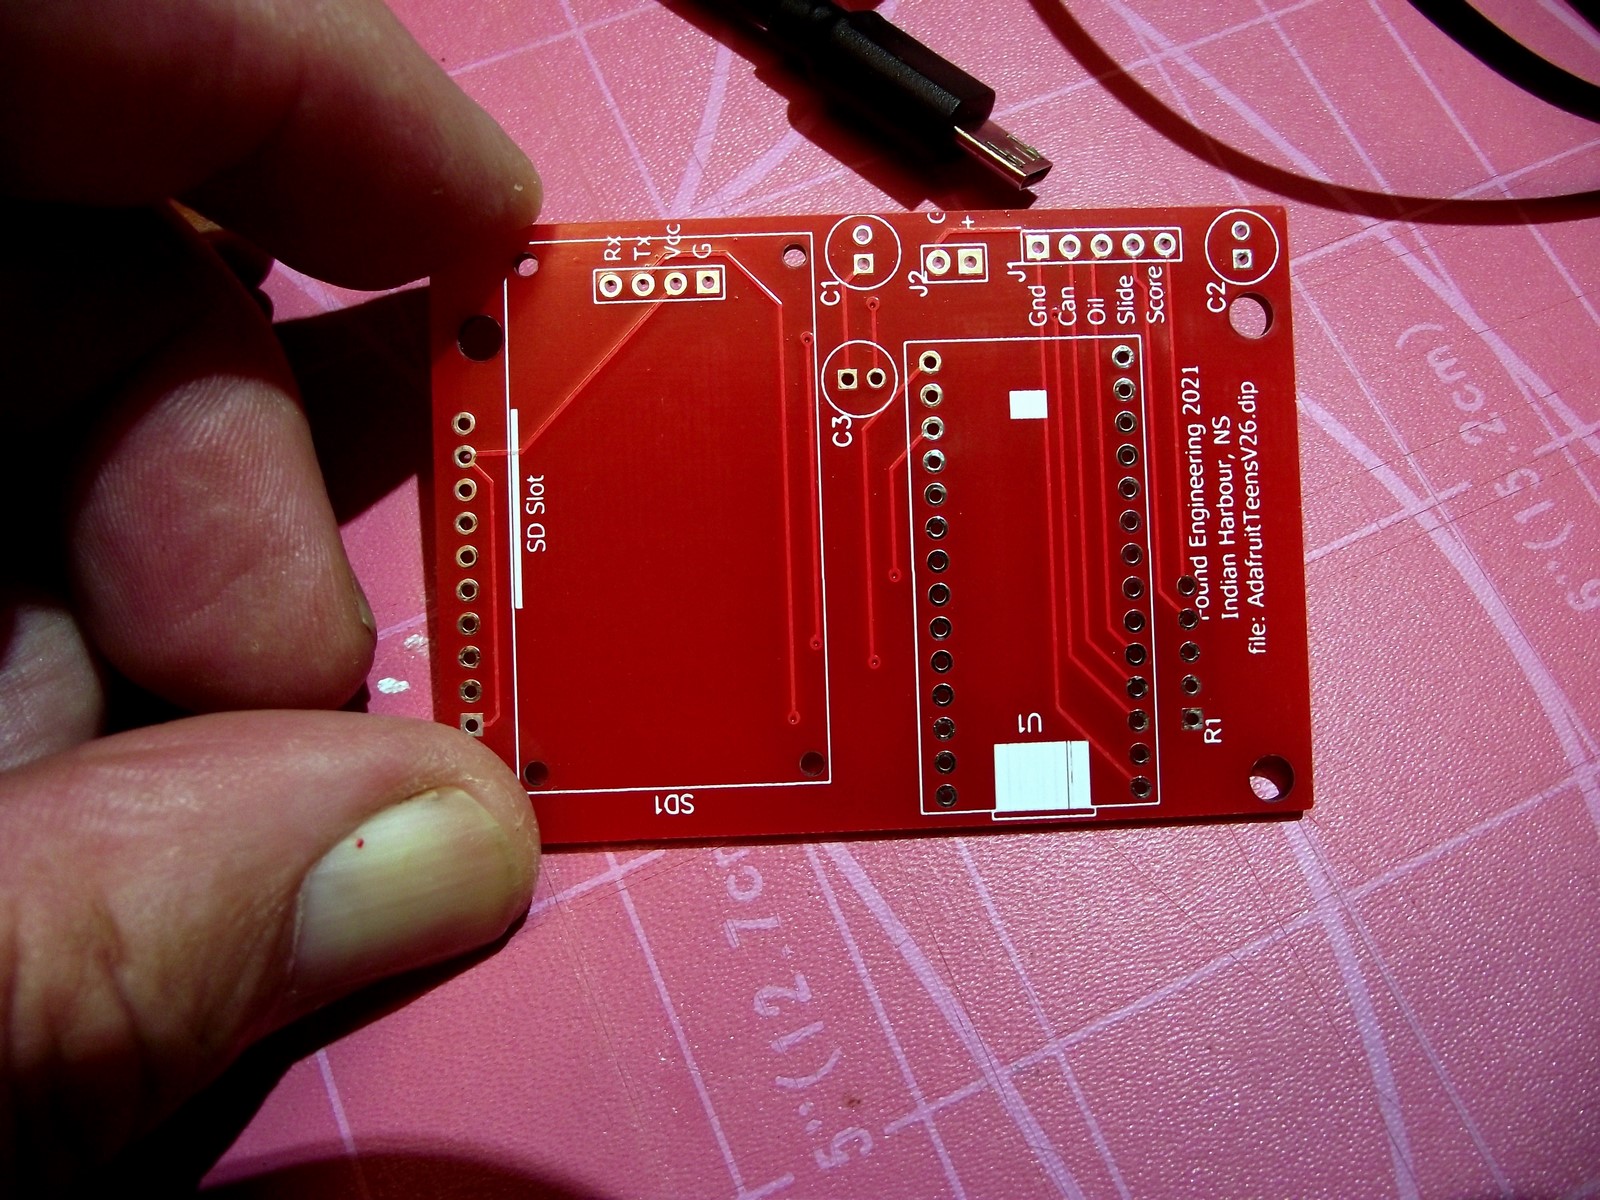 printed circuit board (PCB) for MCU, sound, video